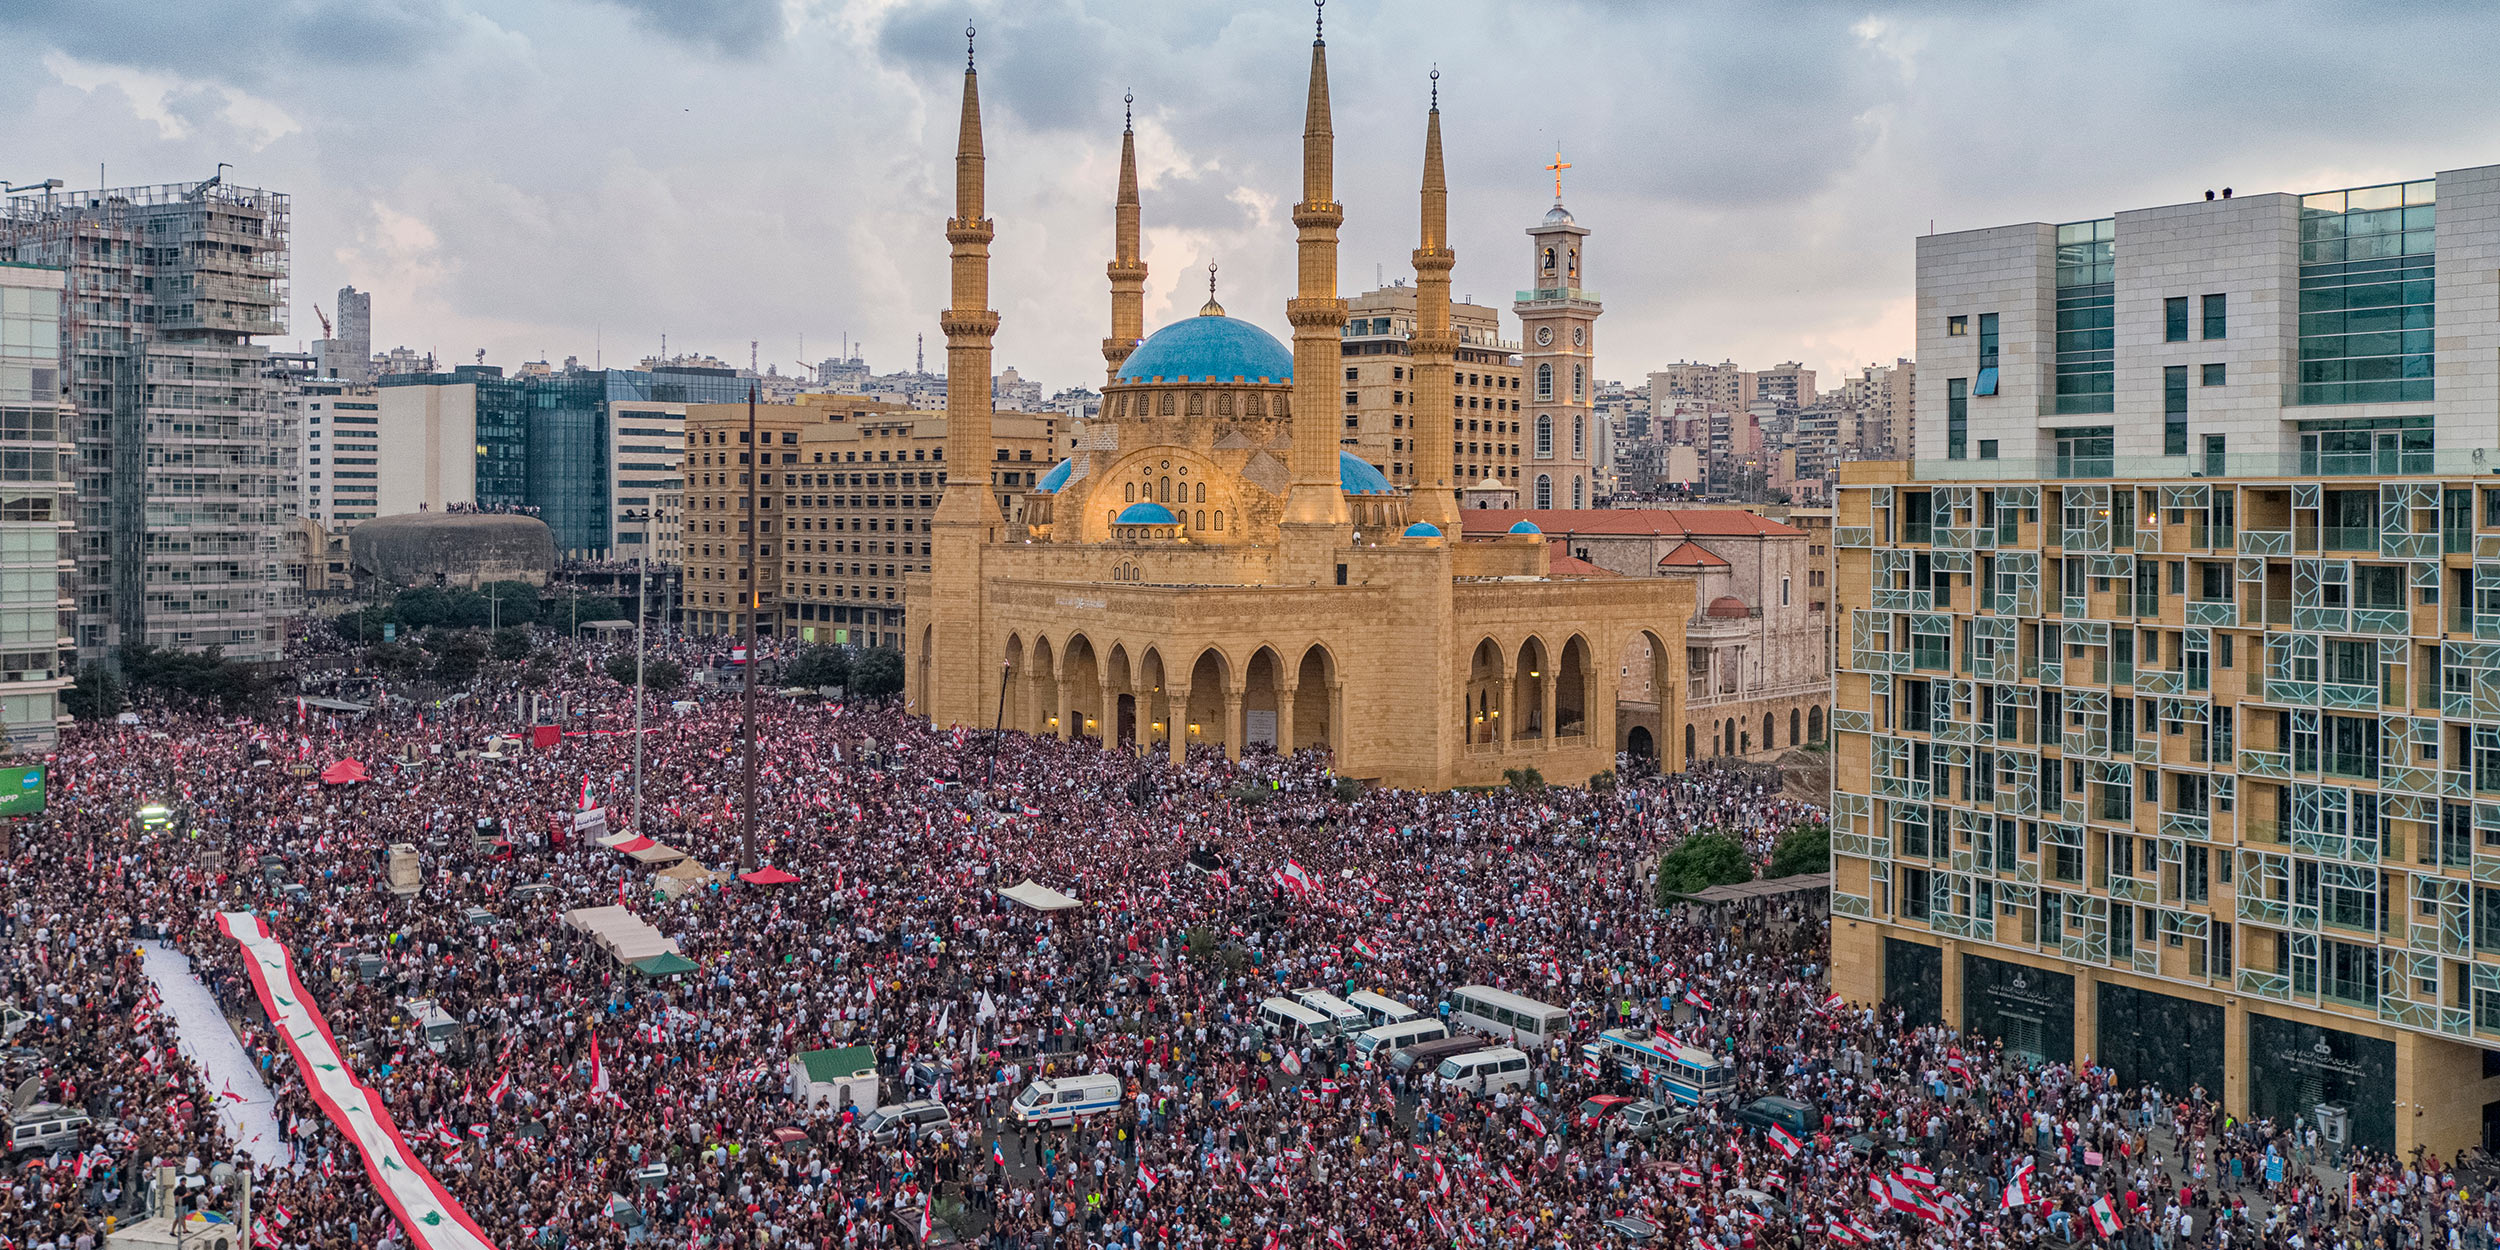 Protesters in Beirut, Lebanon on 10/28/2019 © Diplomedia / Shutterstock